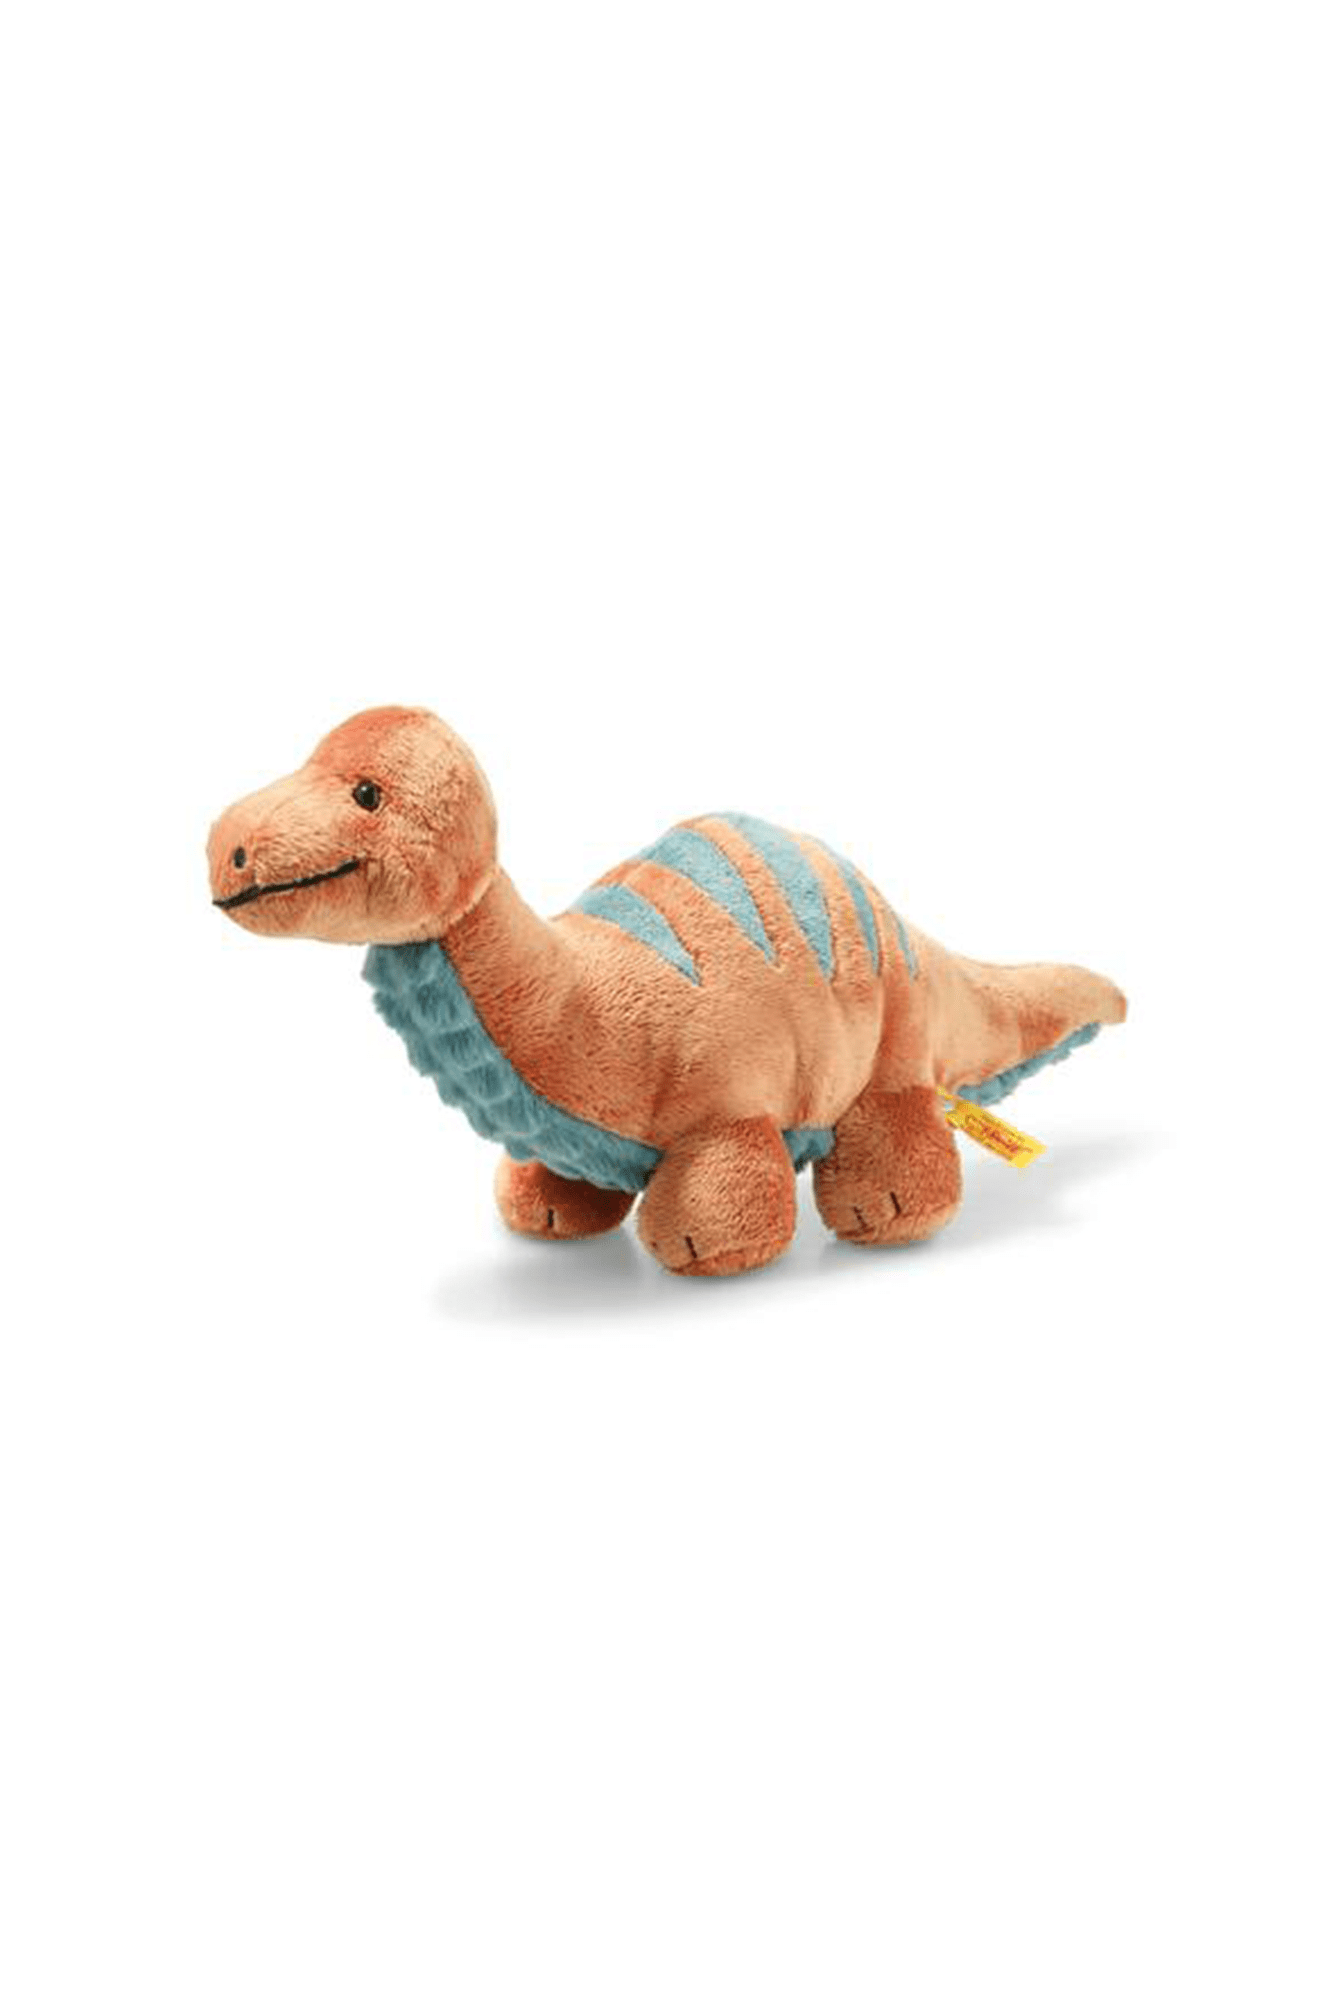 STEIFF Soft Toys Soft Cuddly Friends Bronko brontosaurus Medium